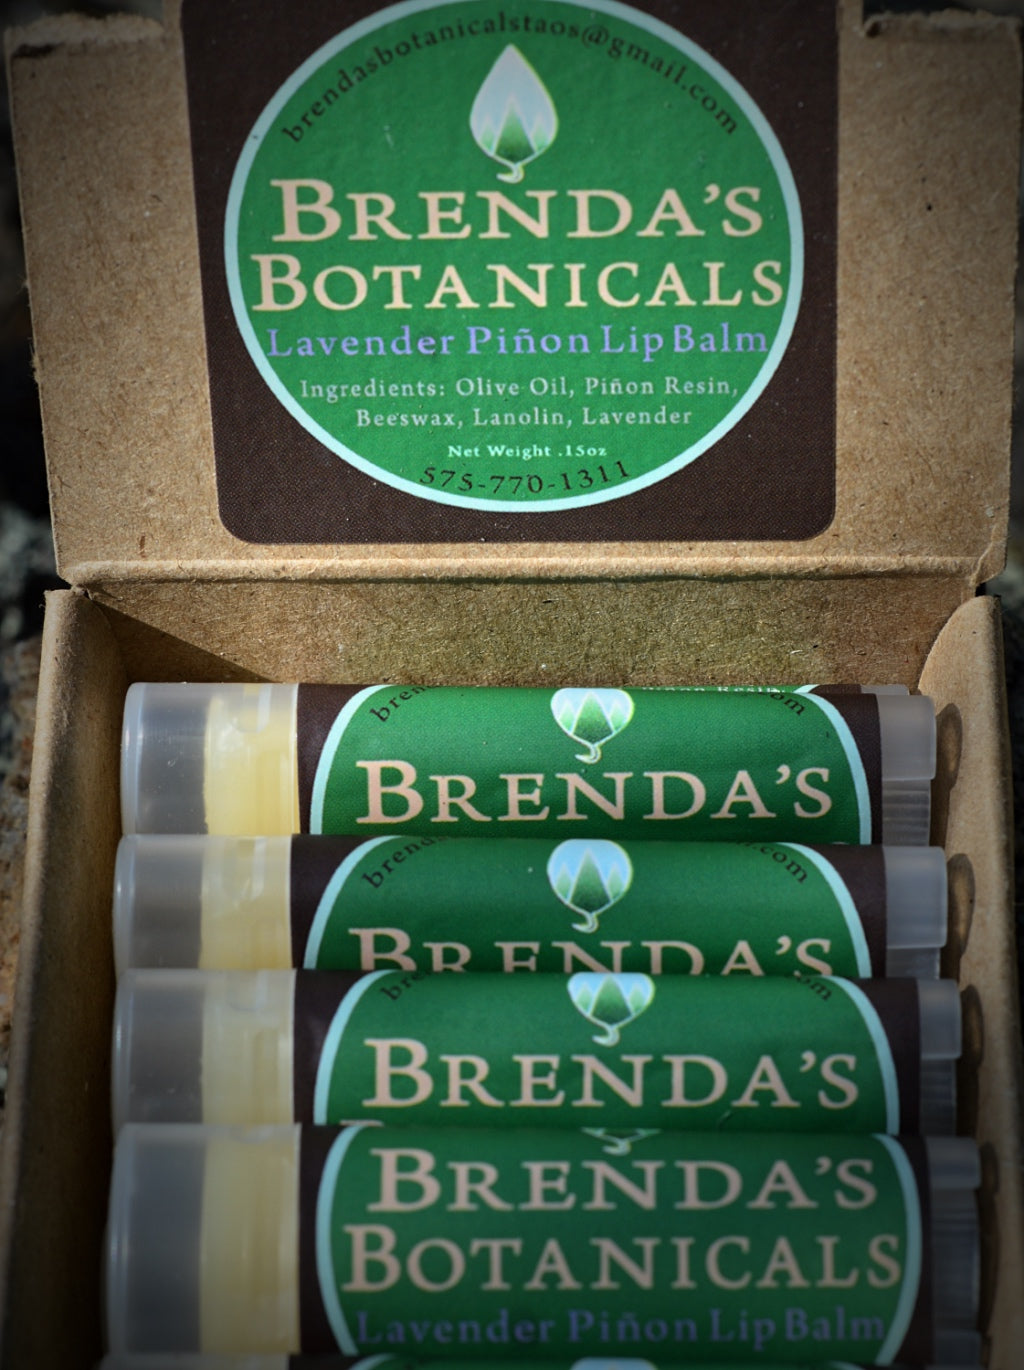 Brenda's Botanicals Piñon Lip Balm - Lavender